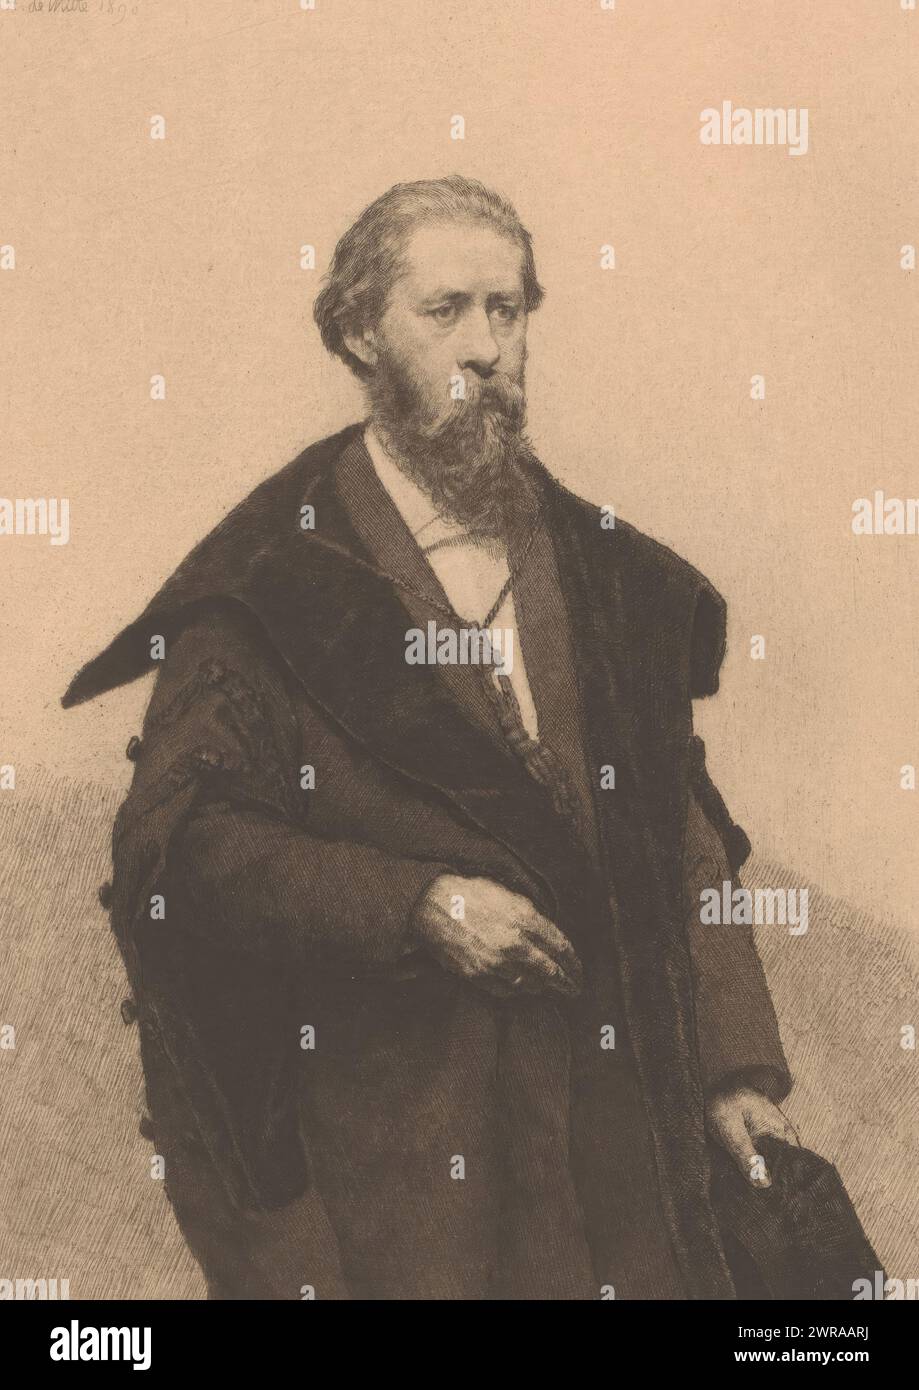 Portrait of Charles Firket, print maker: Adrien De Witte, 1890, paper, etching, drypoint, height 240 mm × width 178 mm, print Stock Photo